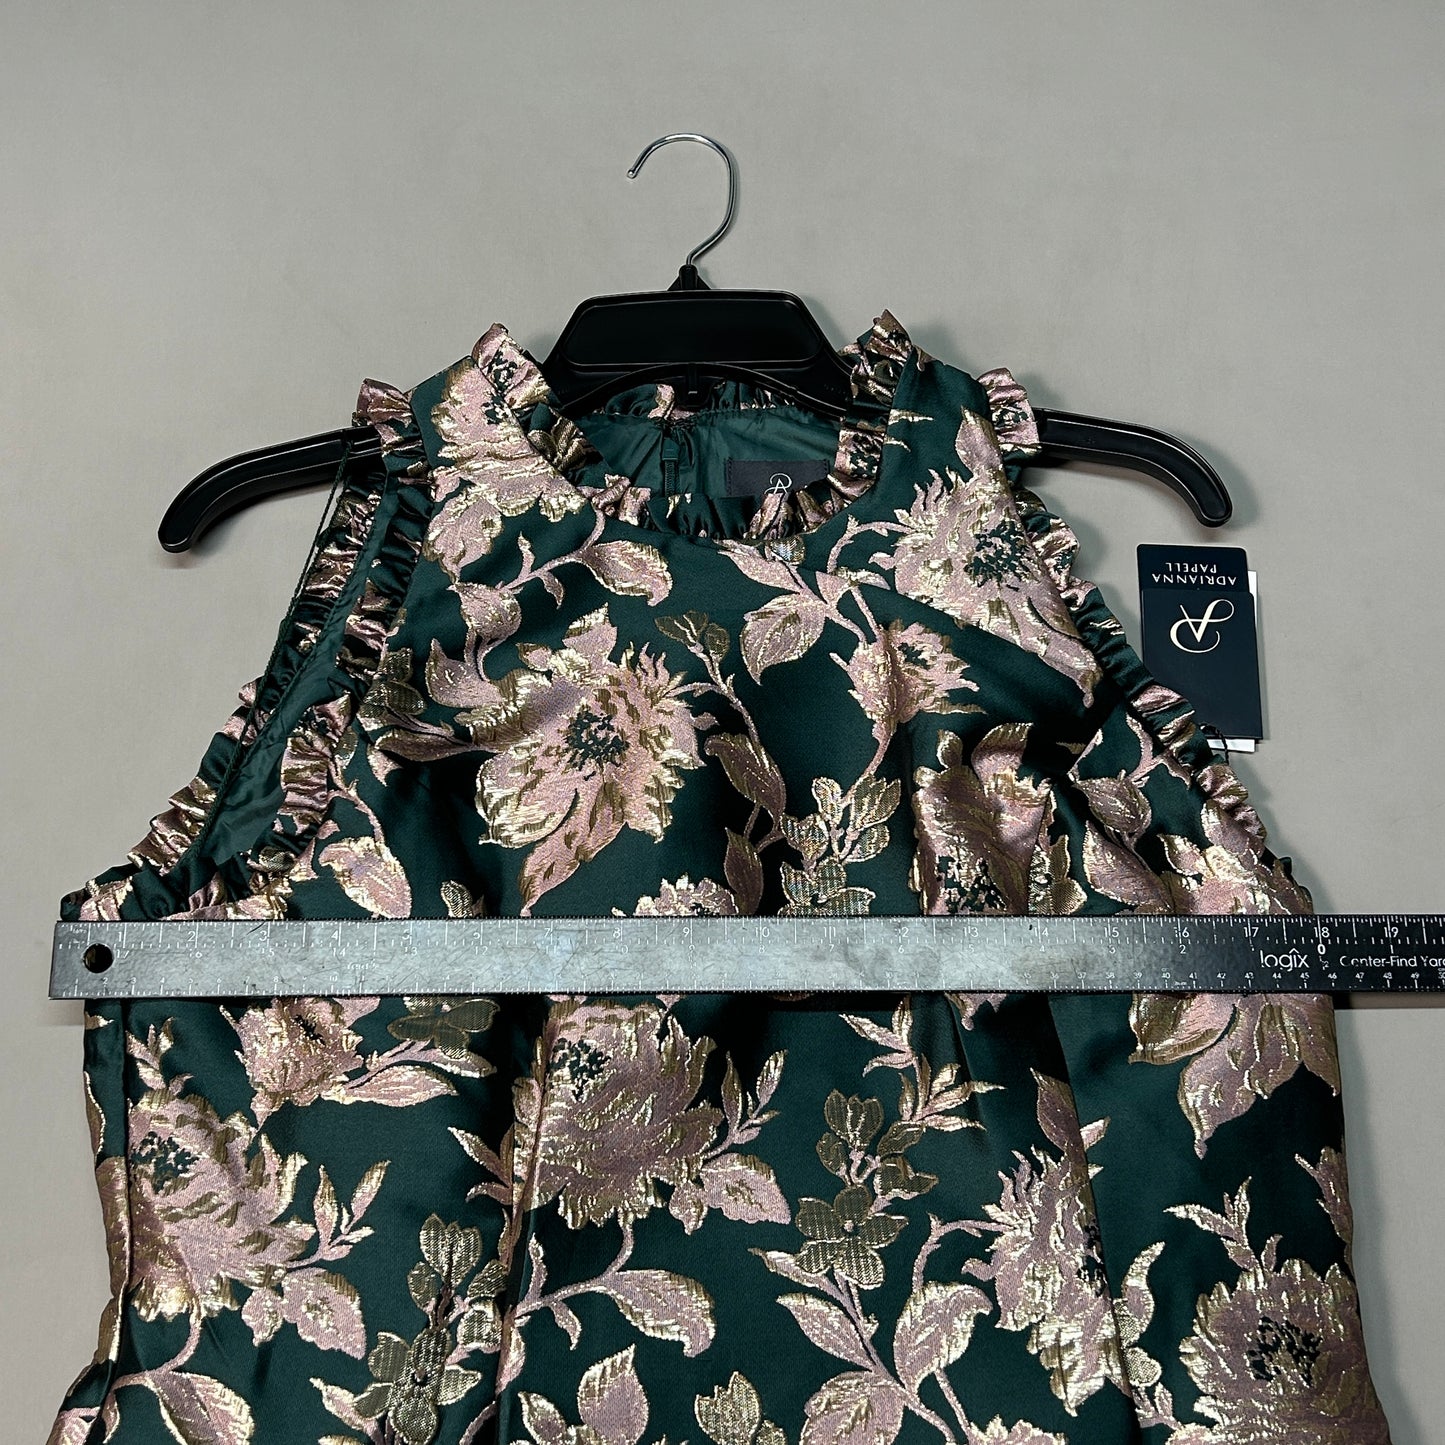 ADRIANNA PAPELL Ruffle Jacquard Dress Hunter Green Size 14 (New)